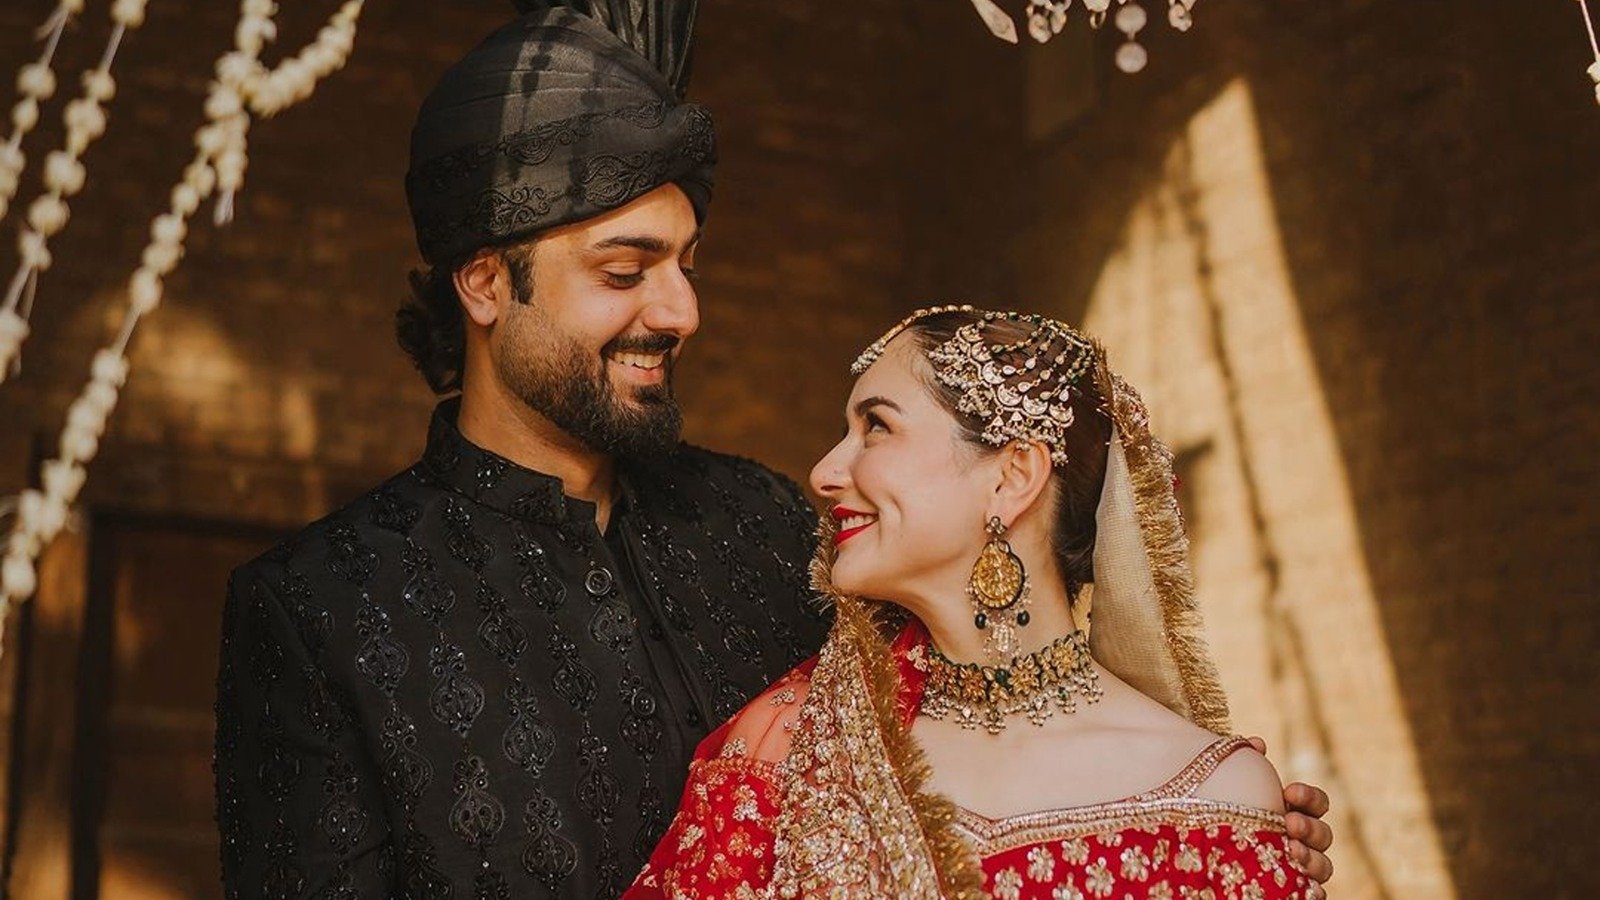 Hania Amir reveals her marriage plans